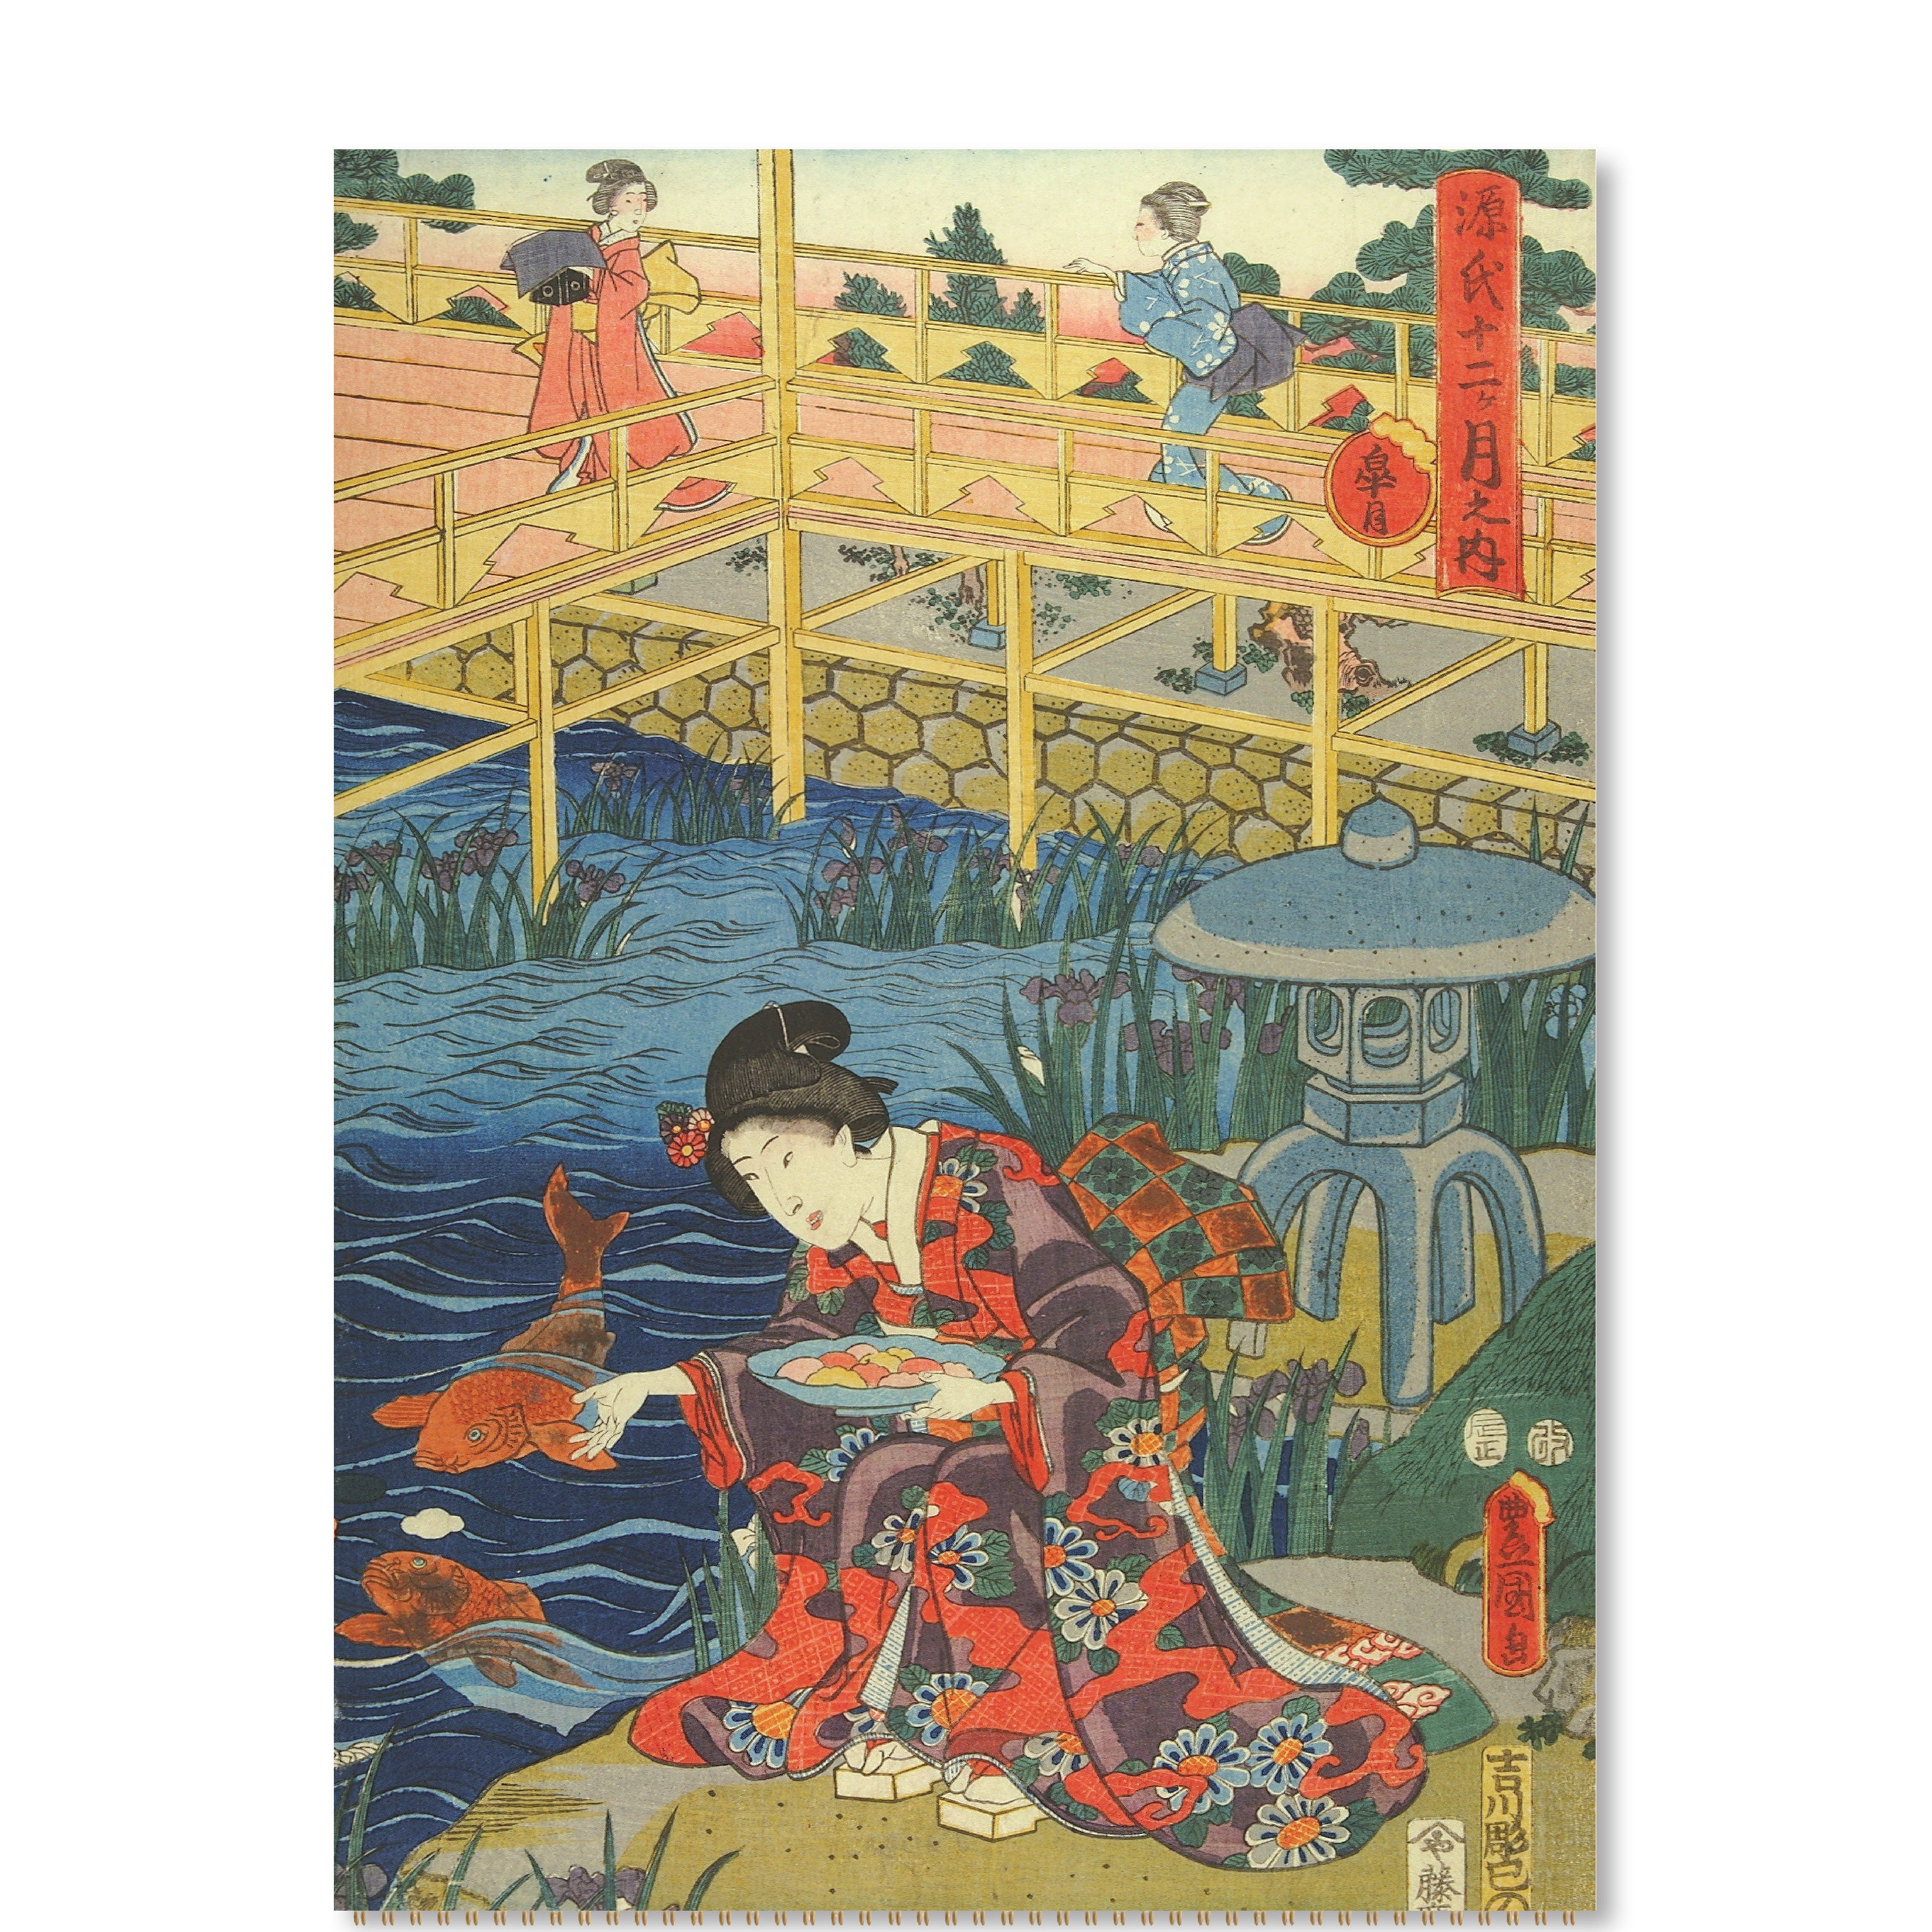 2024 Japanese Woodblock Prints - Deluxe Wall Calendar